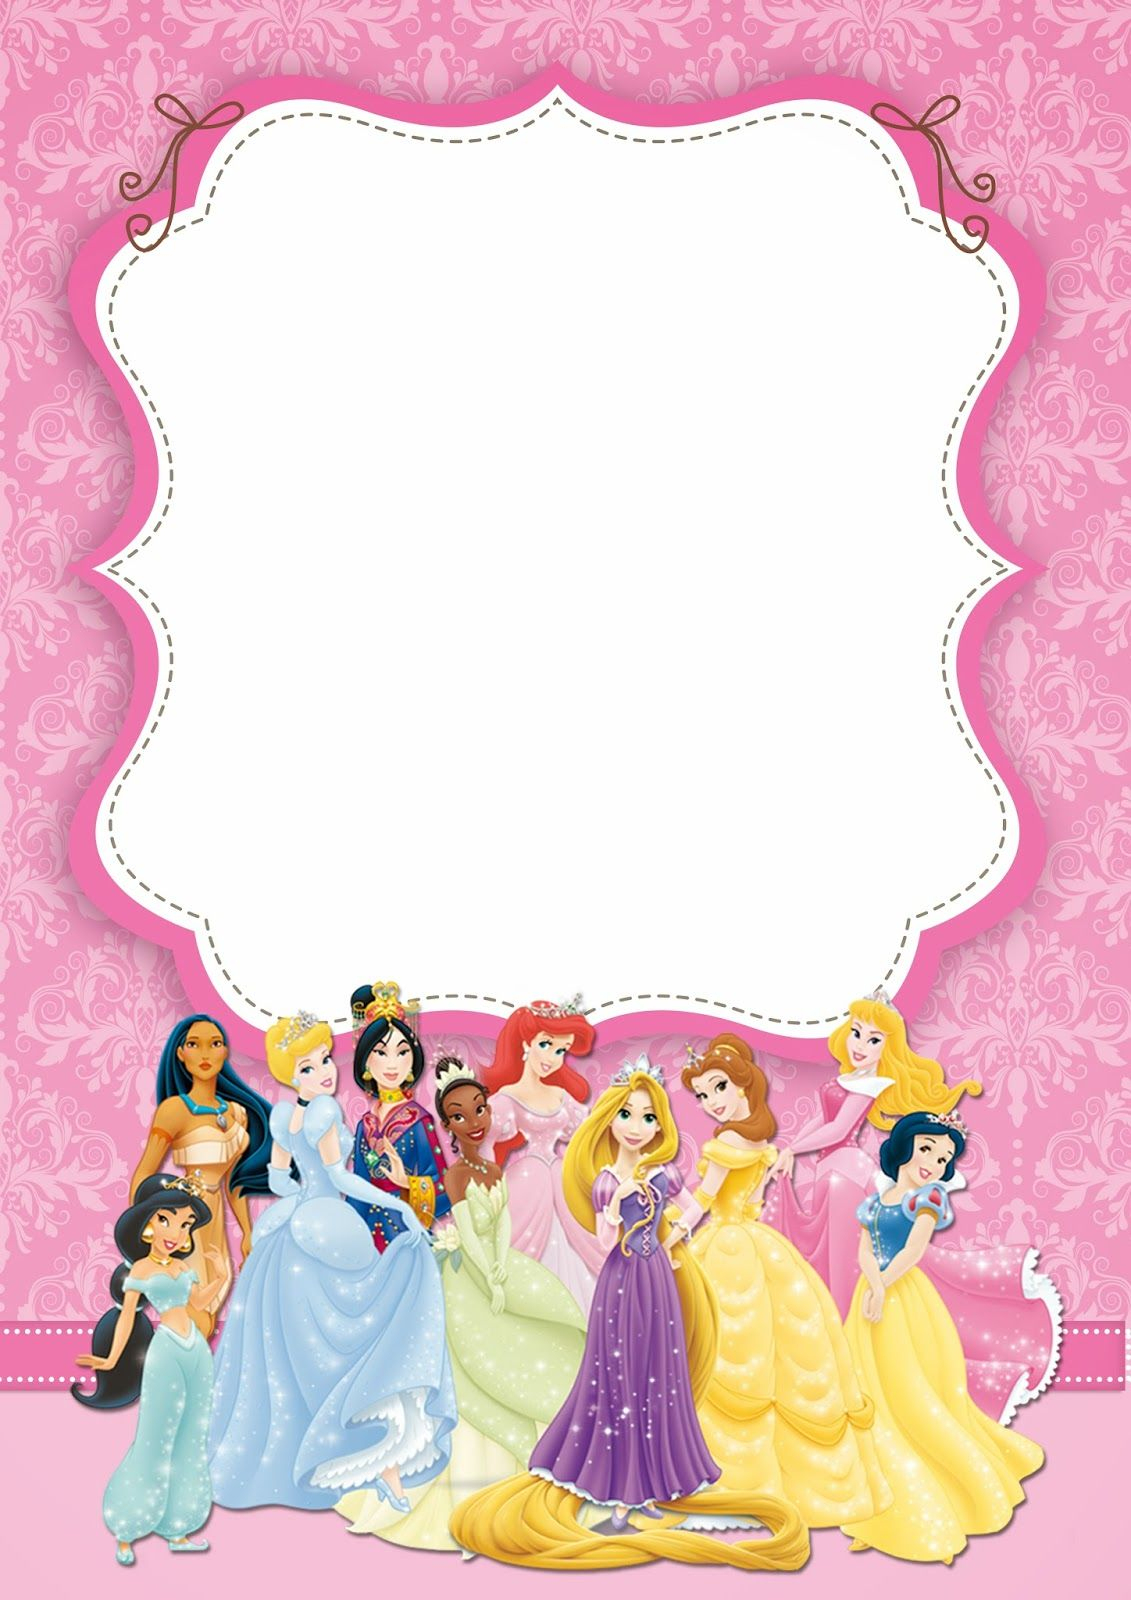 Disney Princess Party: Free Printable Party Invitations. | Oh My - Disney Princess Birthday Invitations Free Printable